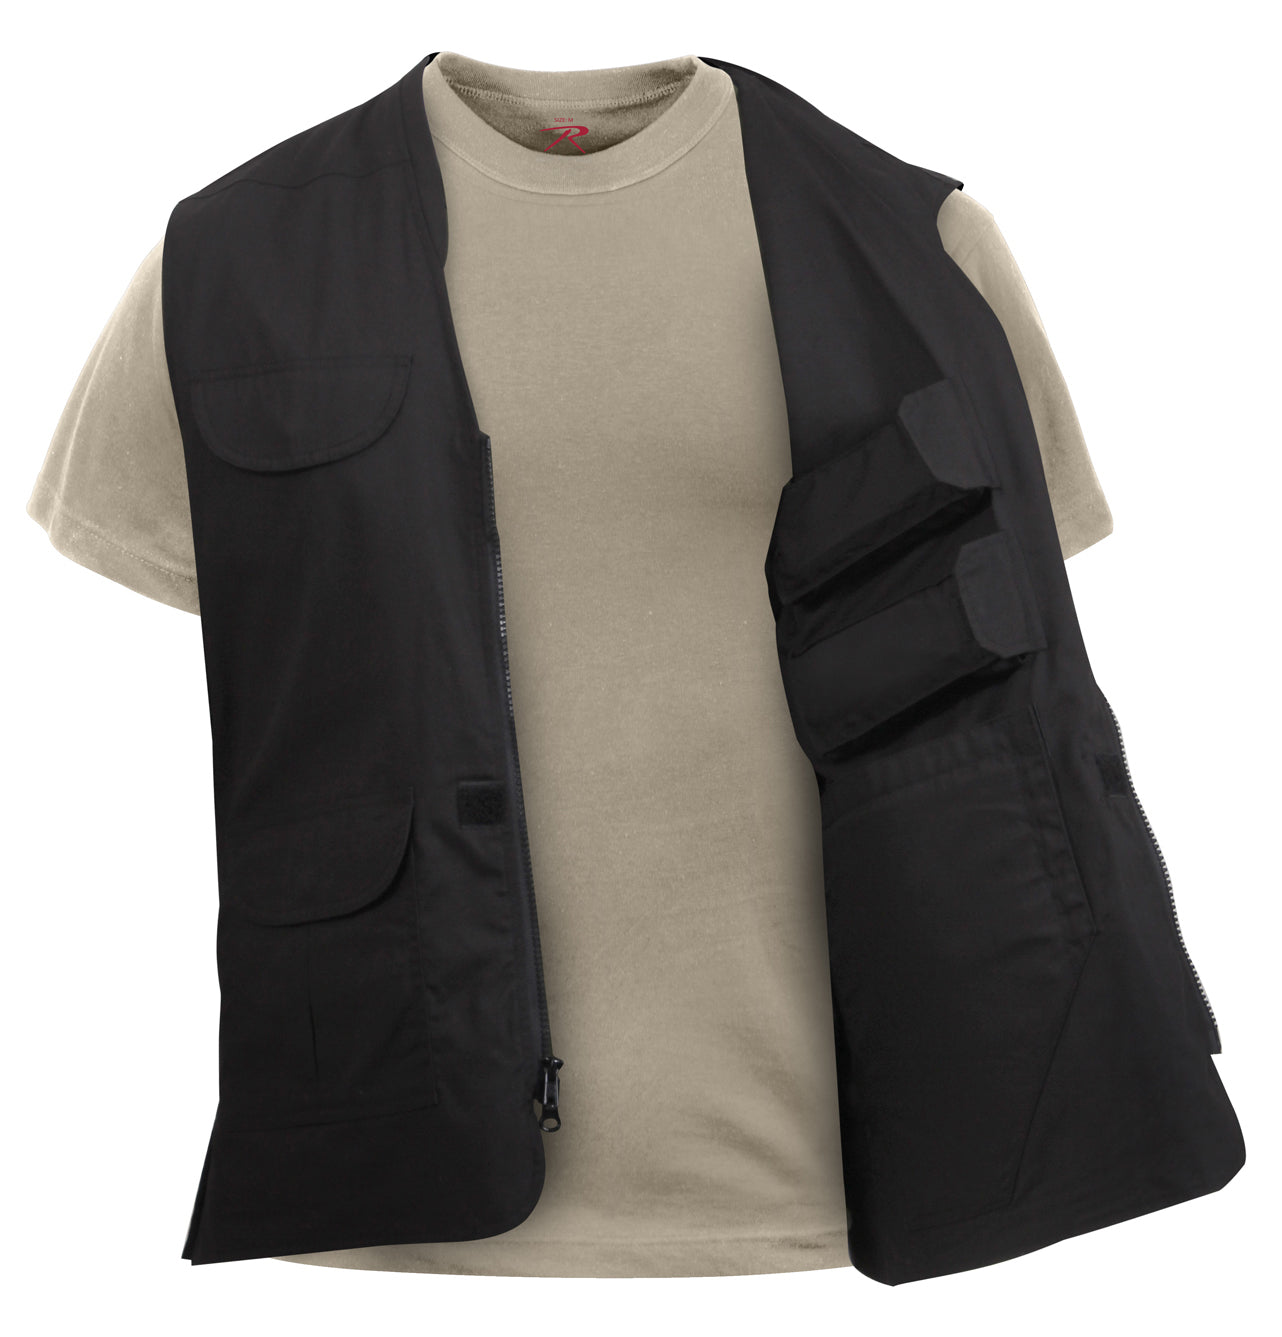 Rothco Lightweight Concealed Carry Pro Vest - Men's Black CCW Tactical Vest